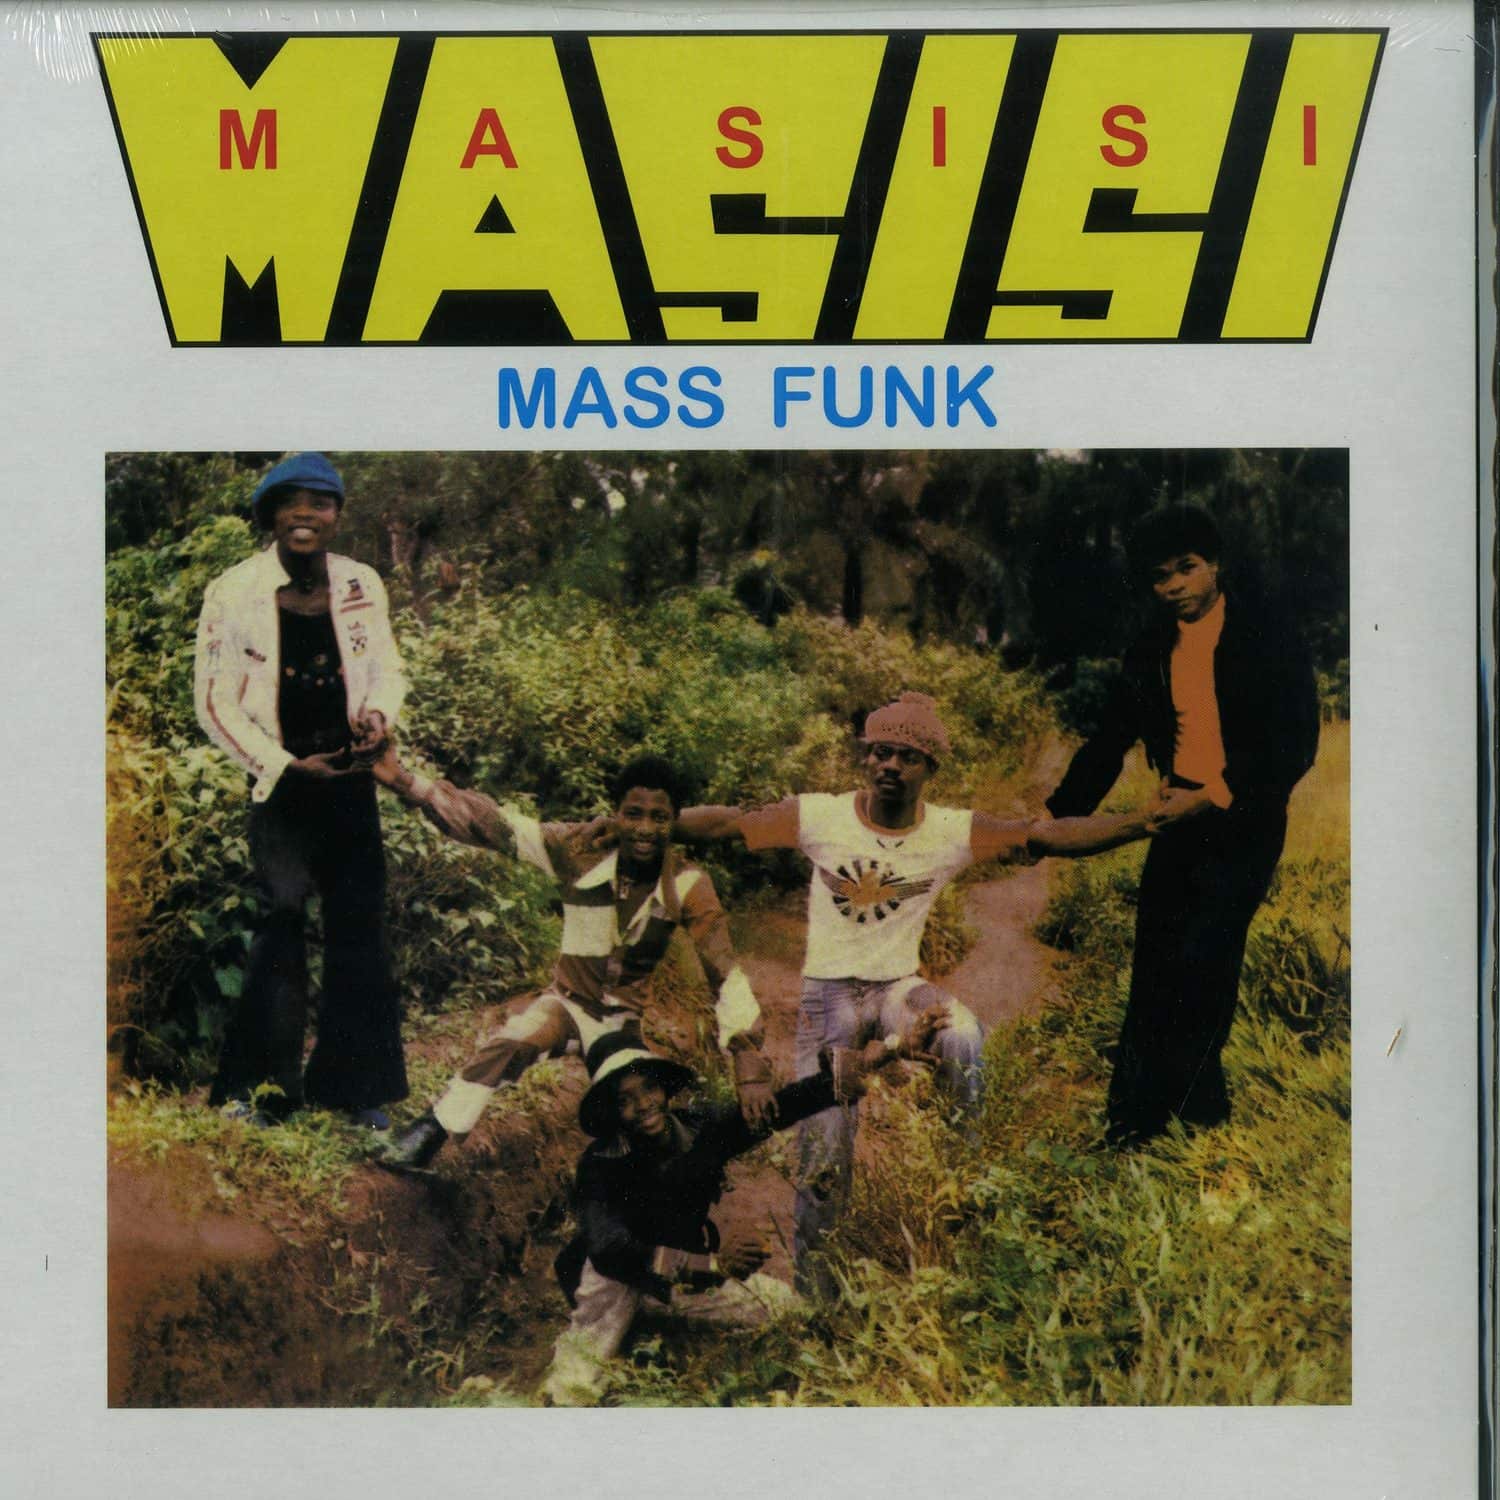 Masisi Mass Funk - I WANT YOU GIRL 